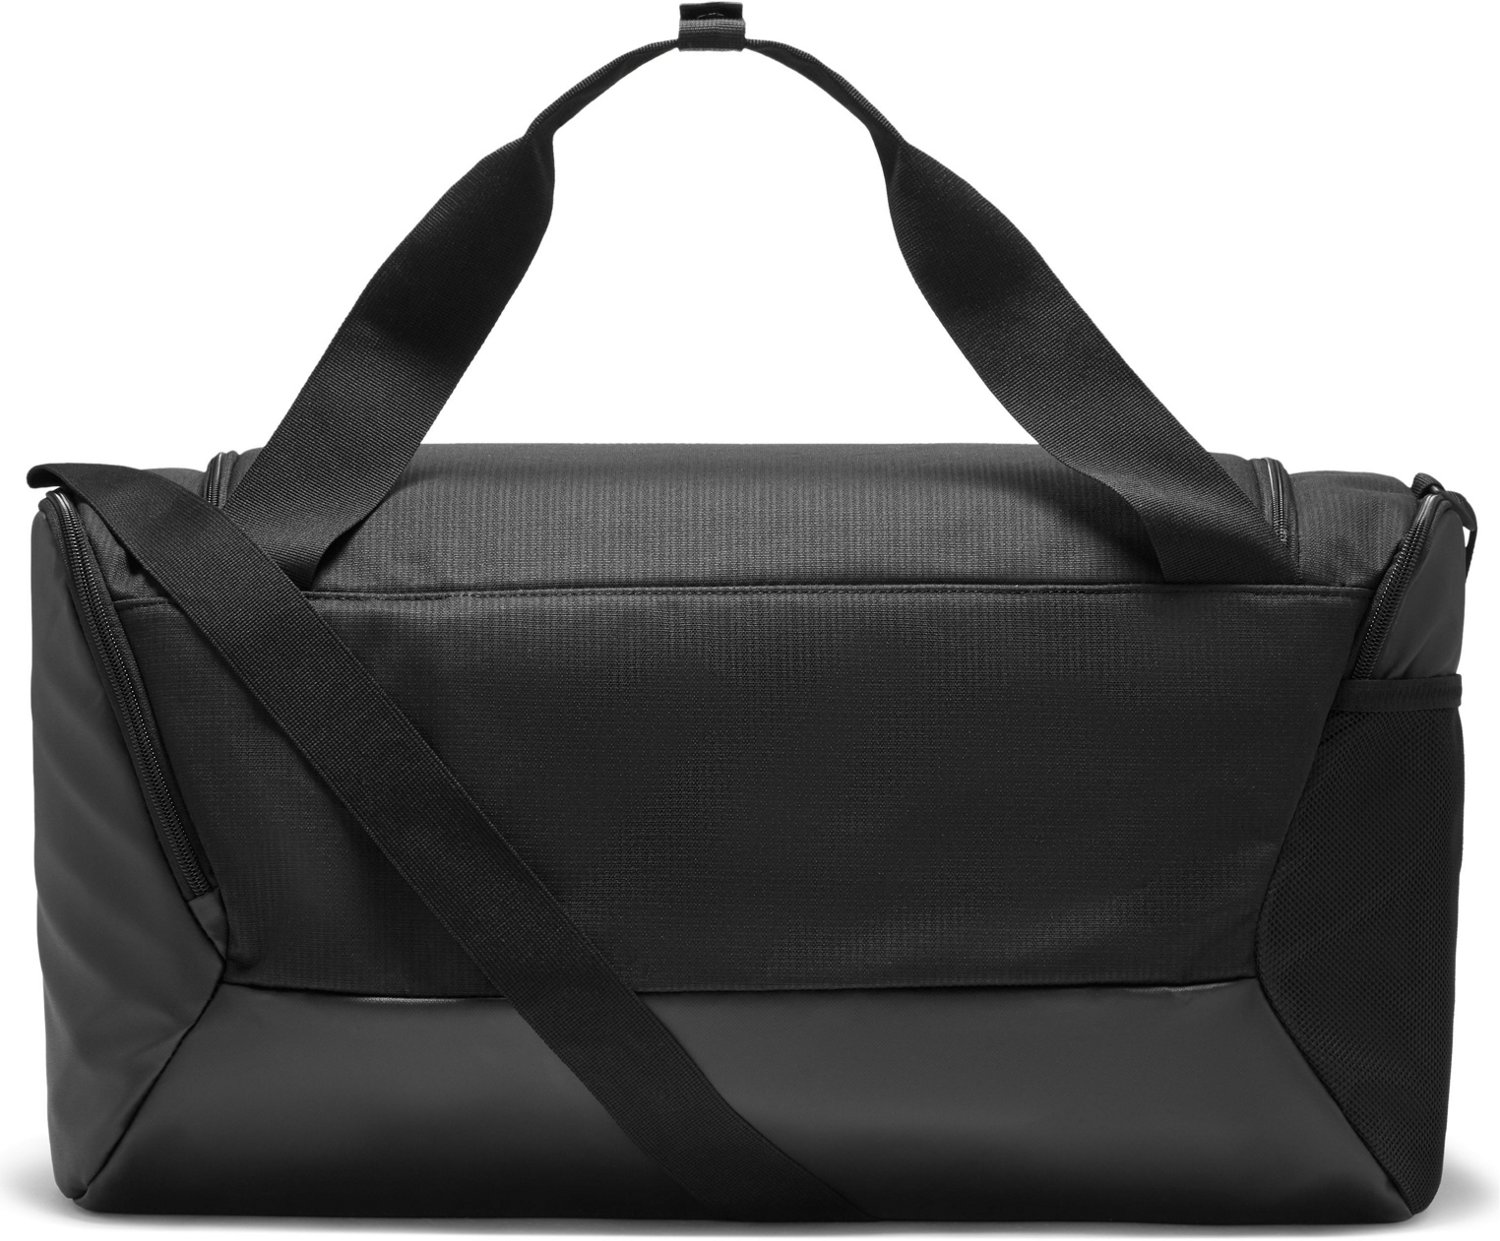 Nike Training Small Duffel Bag | Free Shipping at Academy